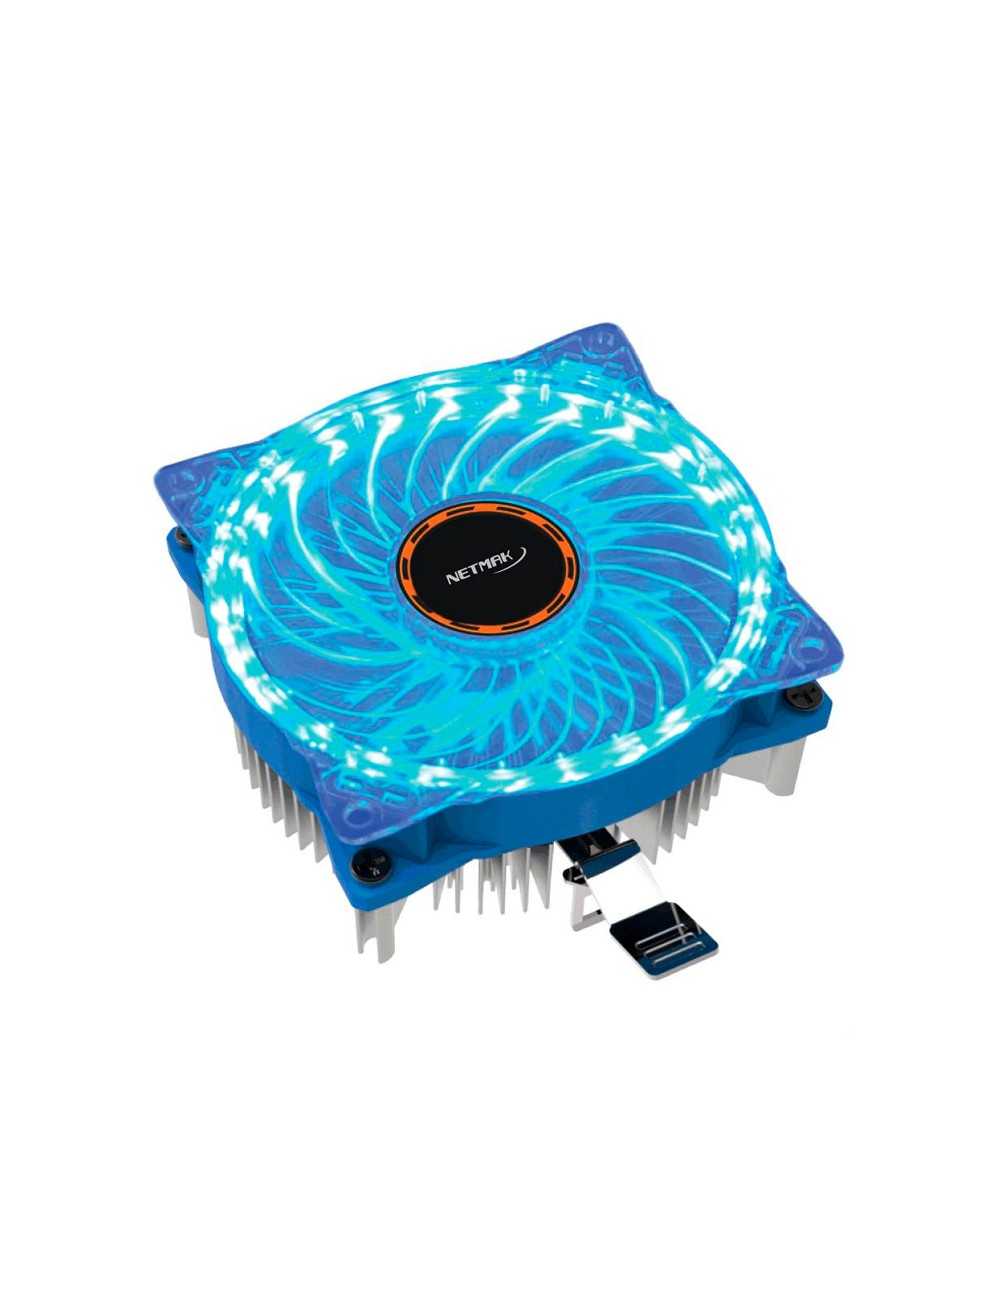 Cooler P/procesador Netmak Nm-q70 25 Leds Azul Intel/amd